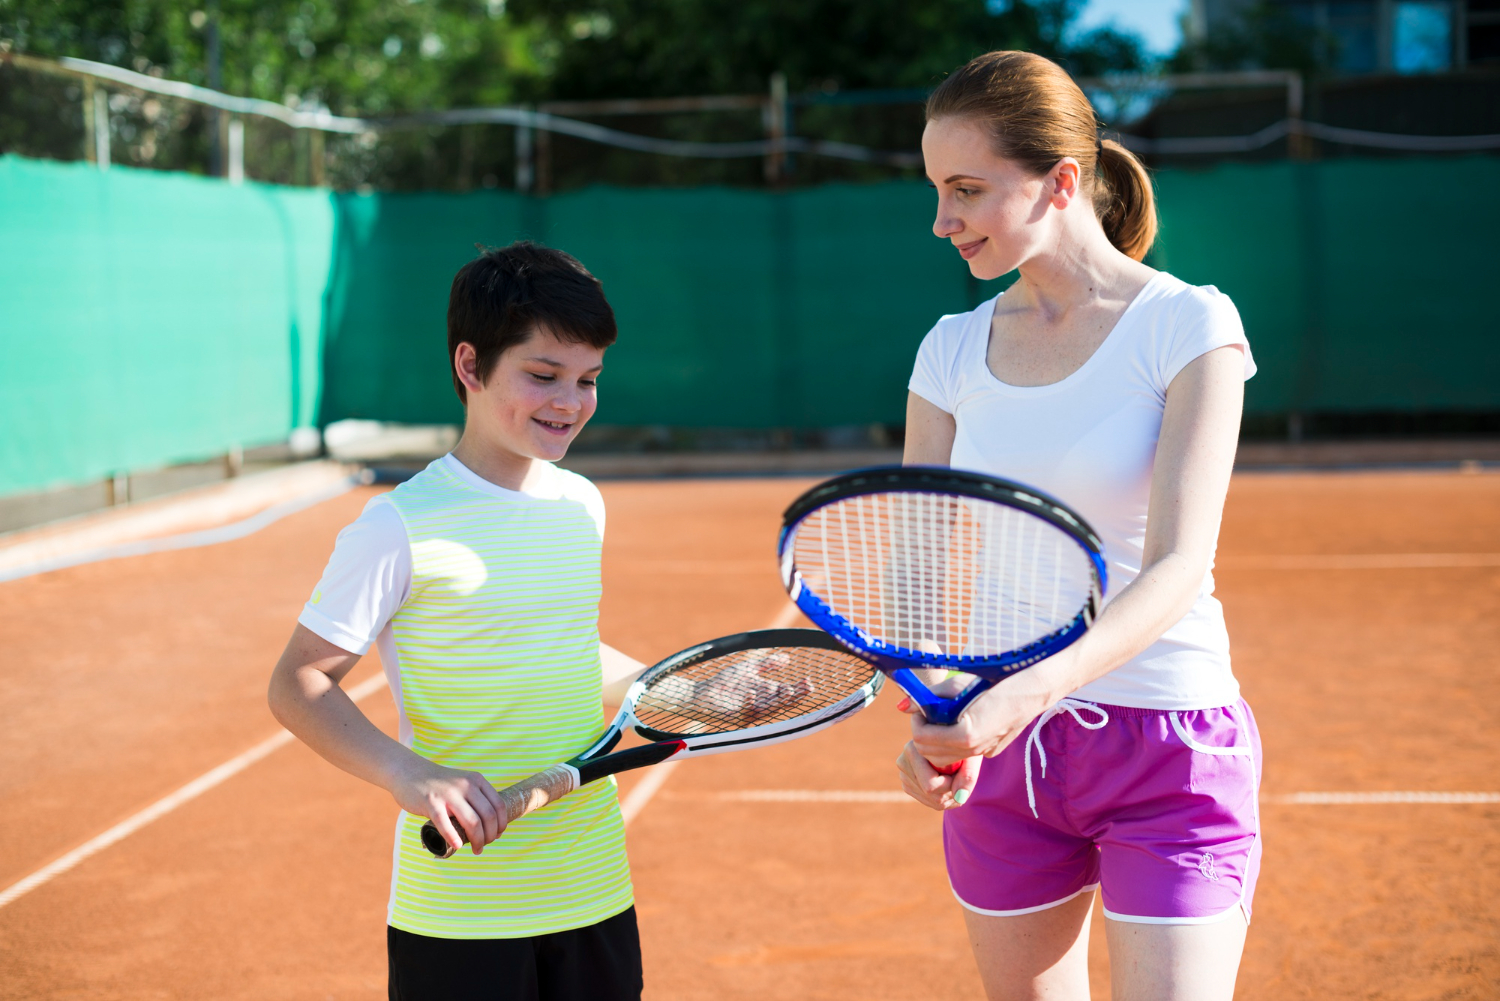 Tenis o pádel ¿qué deporte es más beneficioso para niños